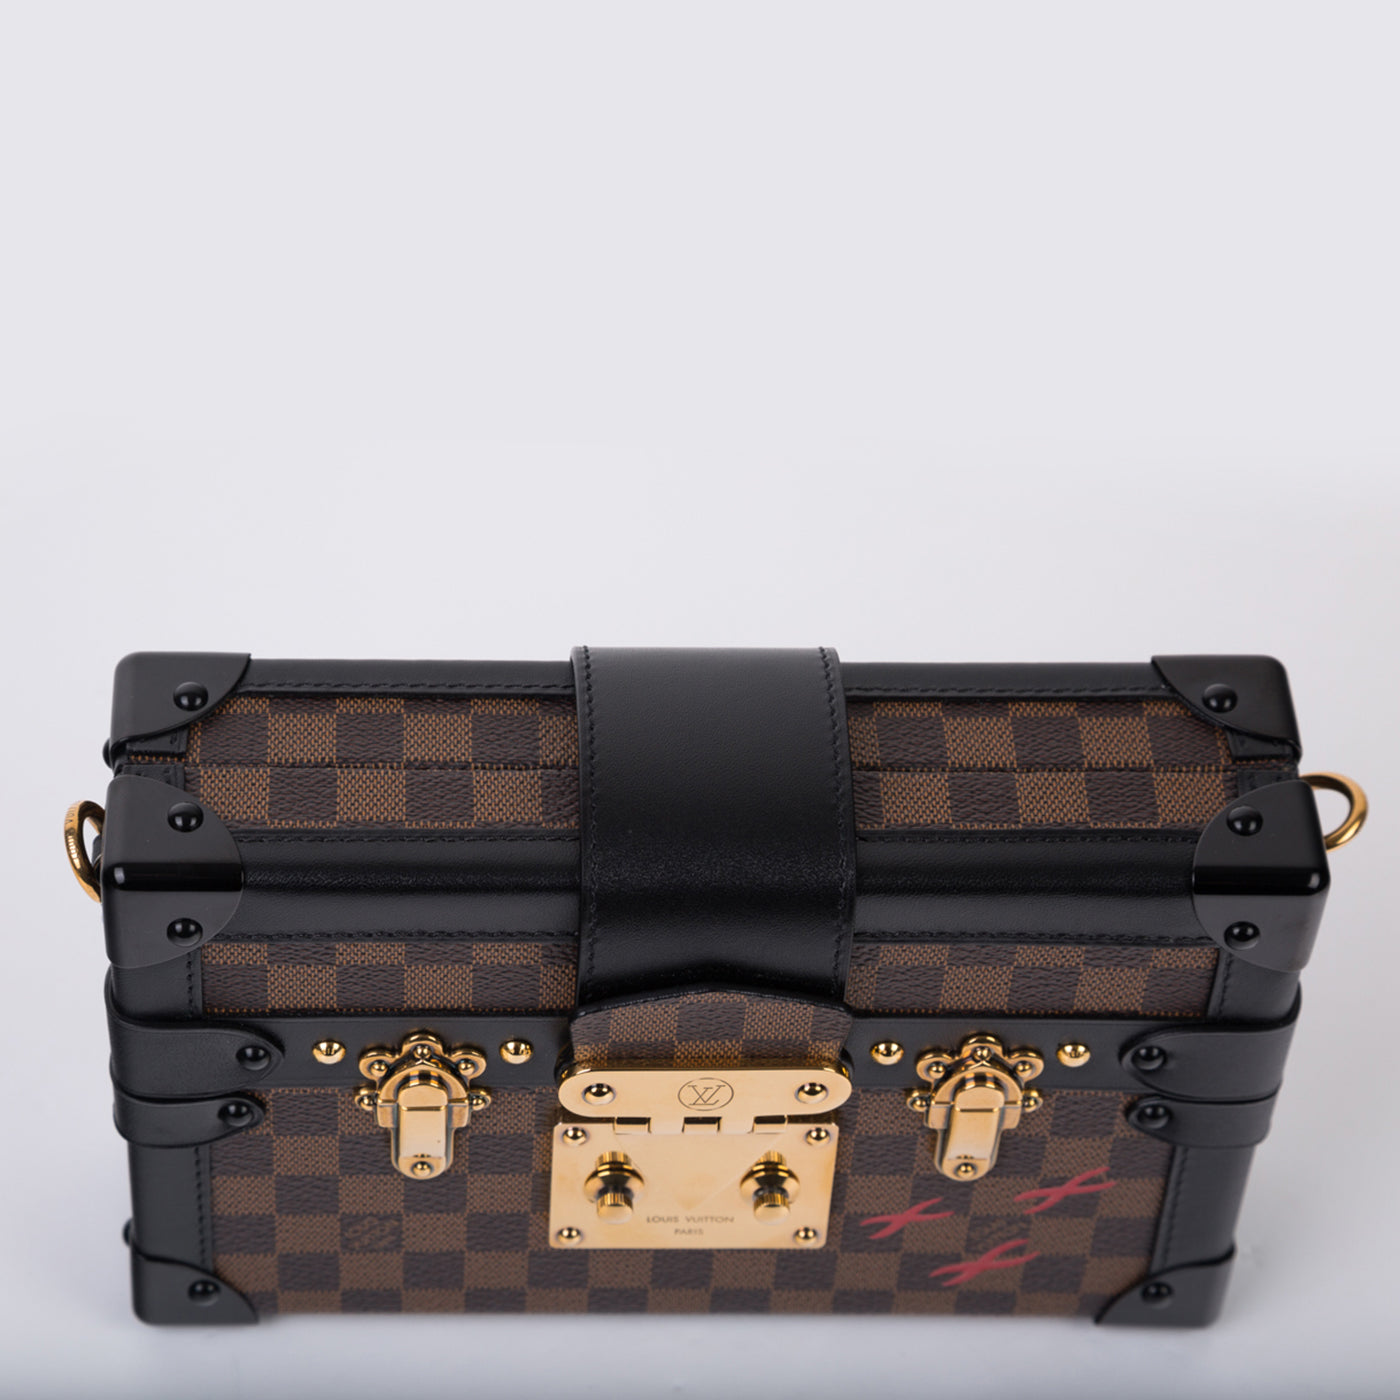 Treasure Chest: Shop the Petite Malle now at www.Bagista.co.uk #LouisVuitton  #PetiteMalle #Monogram #LV #Fashion #Handbags #Bagista…